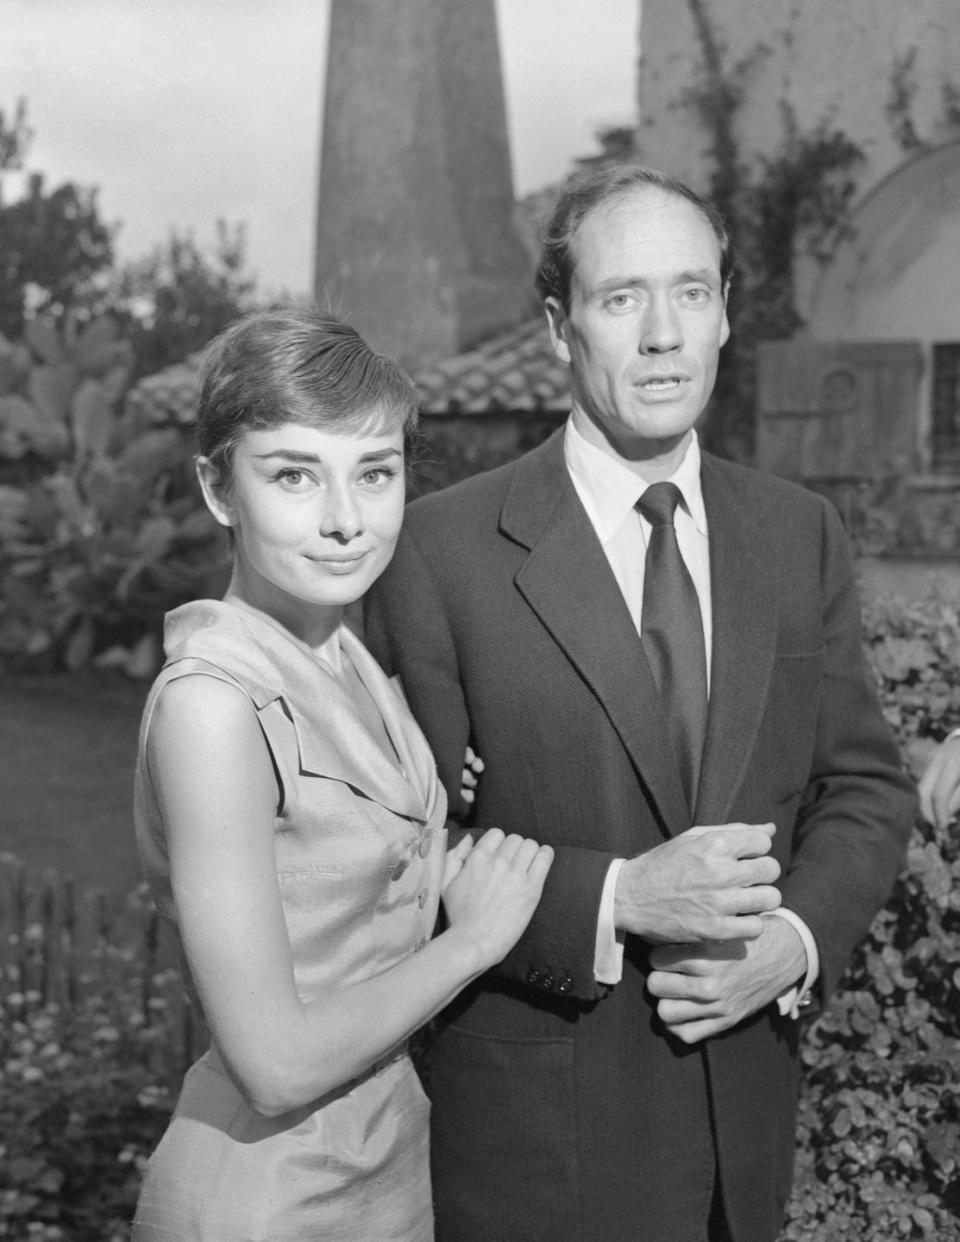 1954: Audrey Hepburn and Mel Ferrer